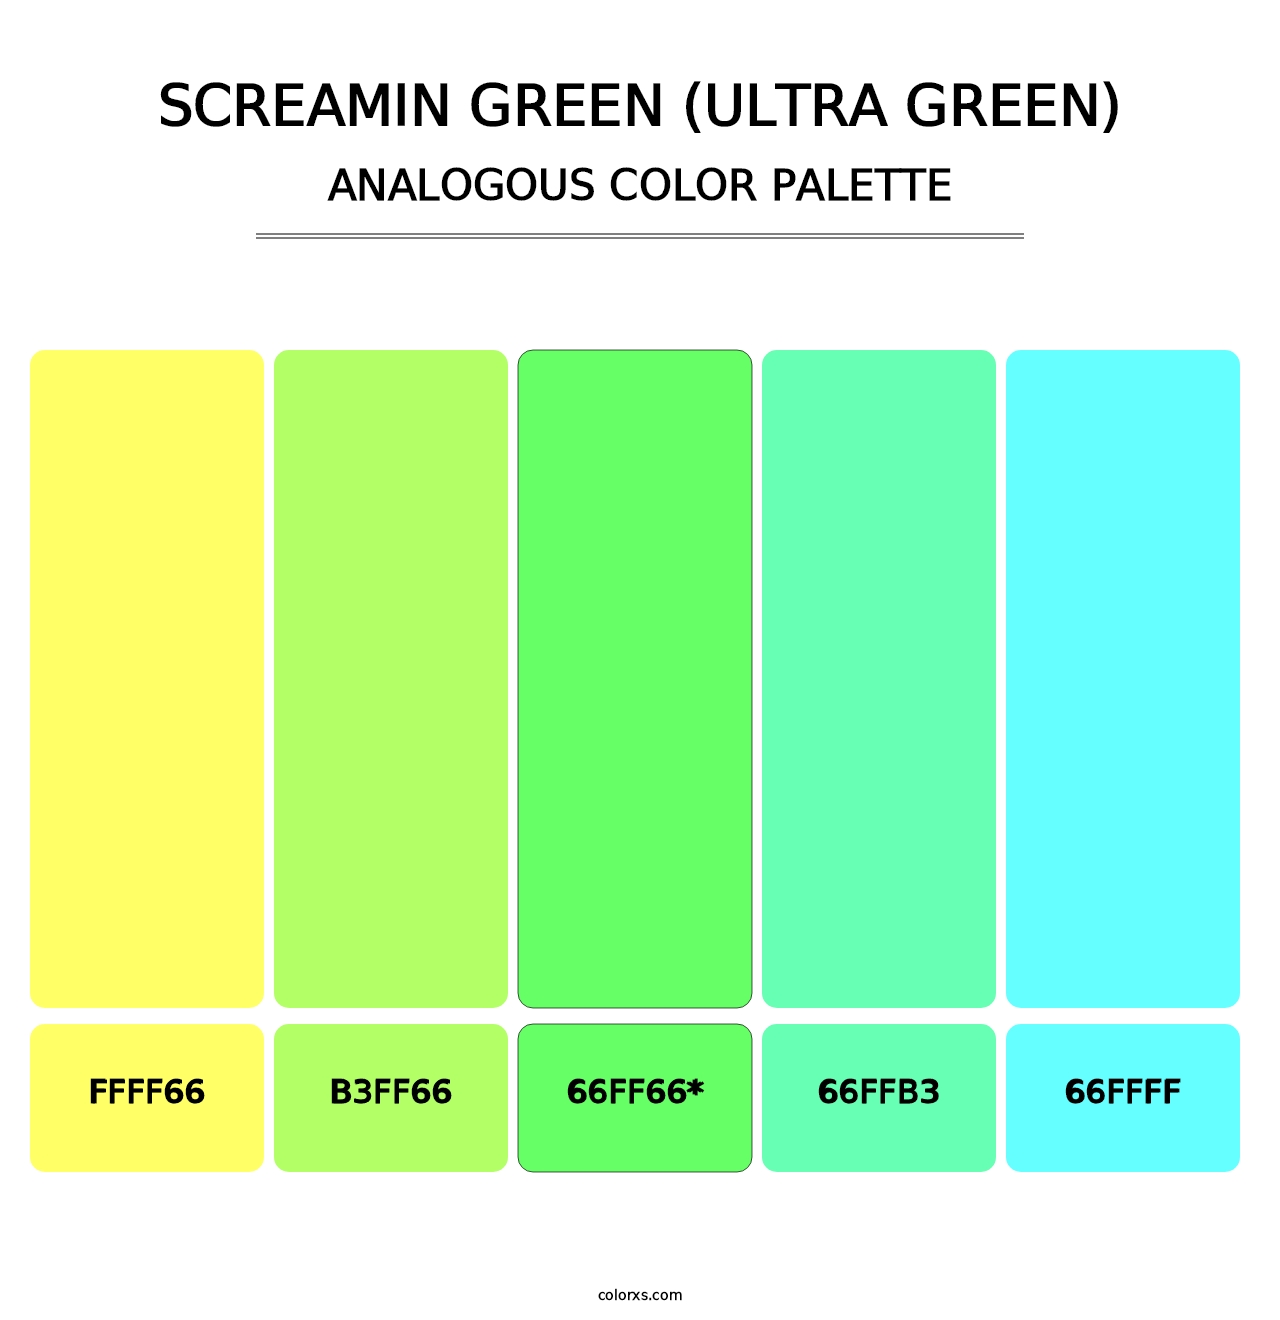 Screamin Green (Ultra Green) - Analogous Color Palette